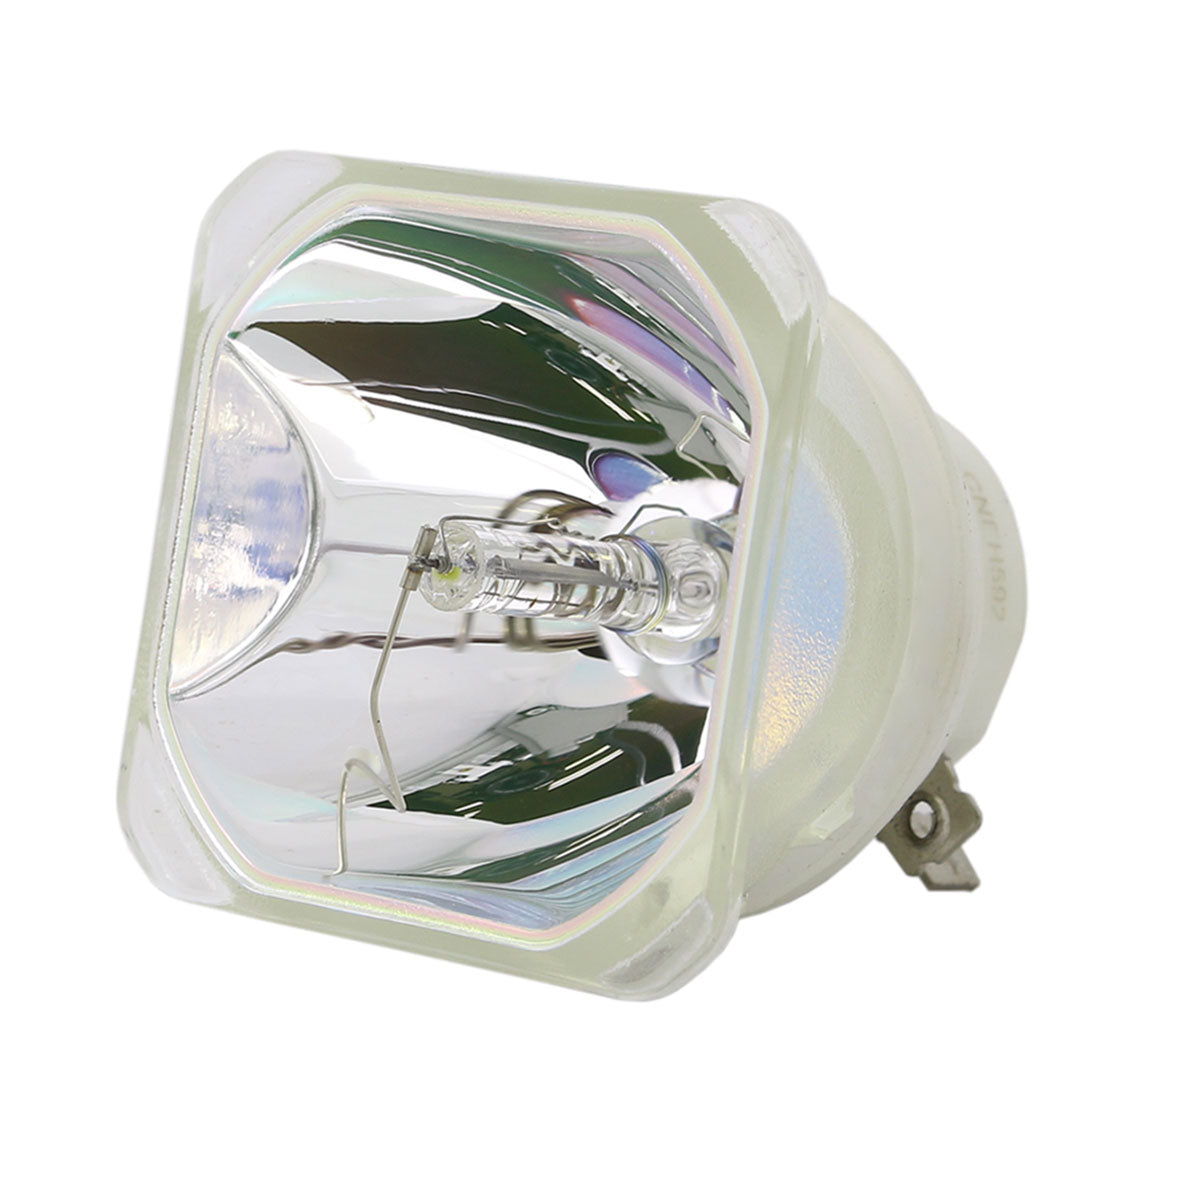 ASK Proxima 3400338501 Ushio Projector Bare Lamp